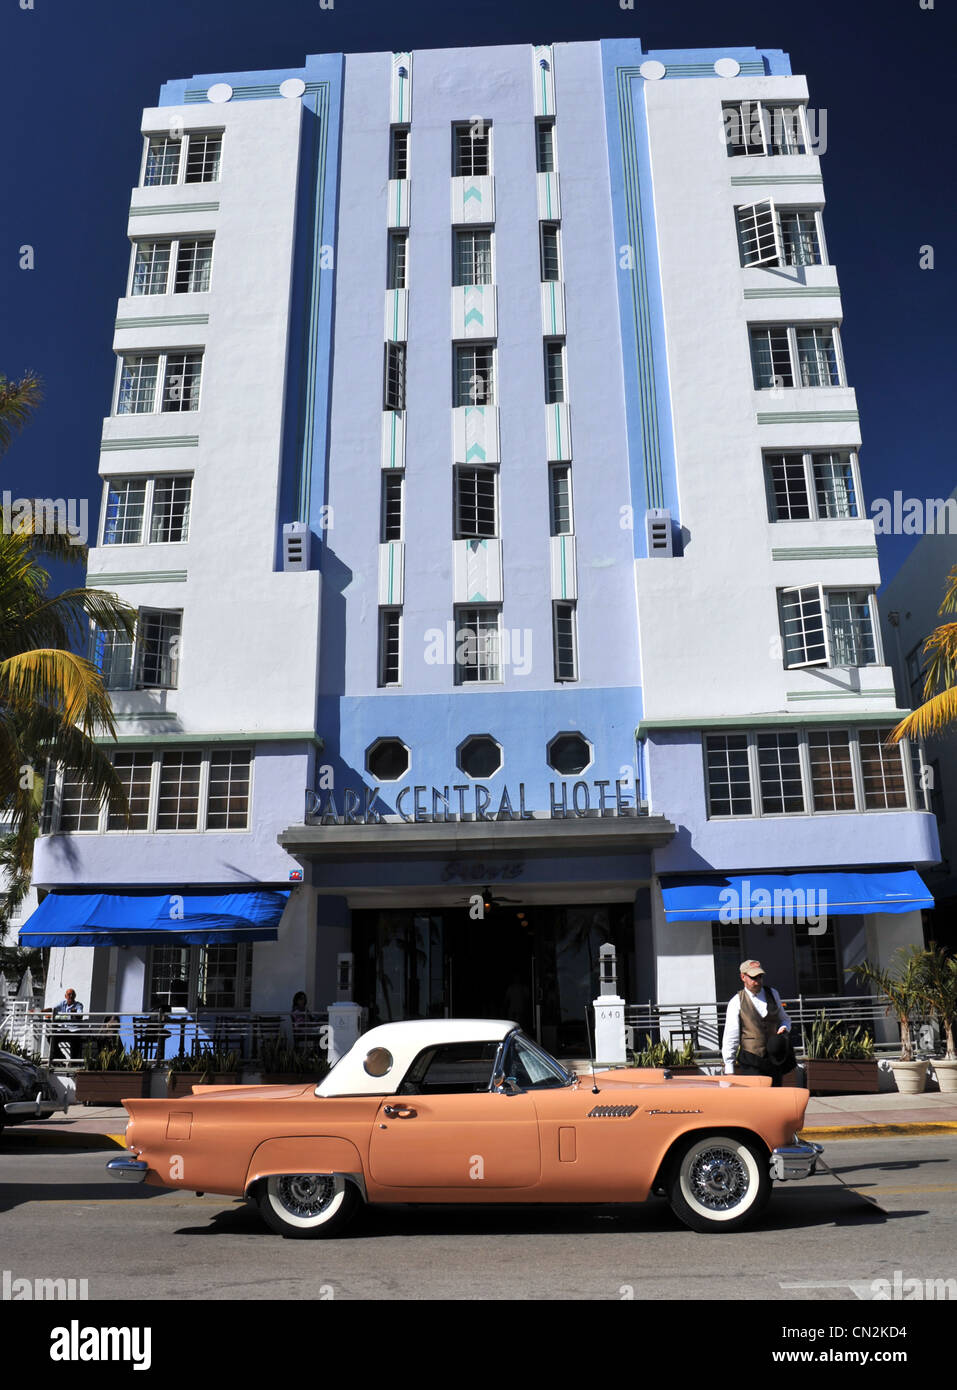 Park Central Hotel, Miami, Floride, USA Banque D'Images